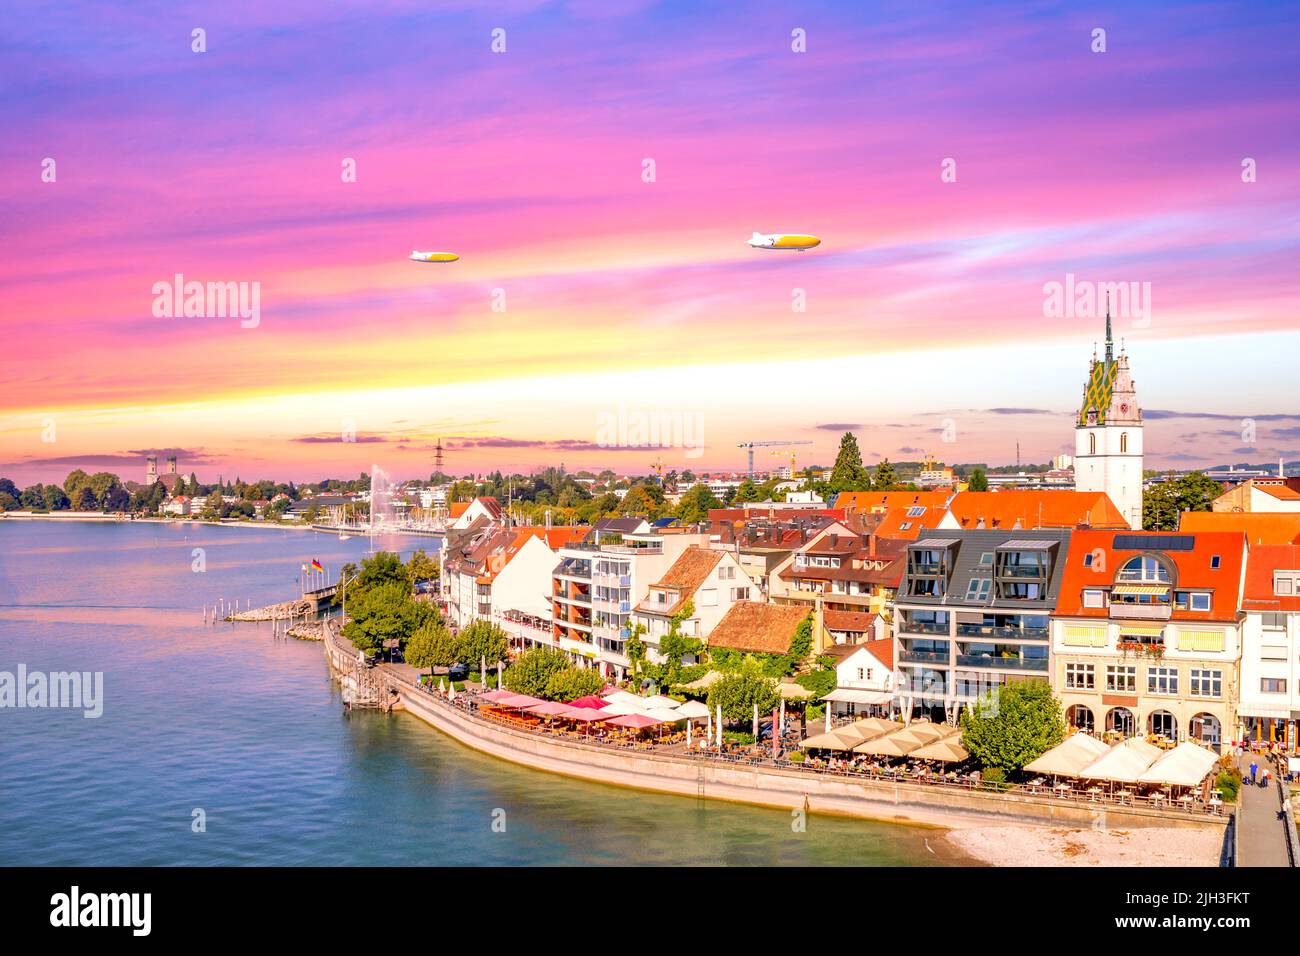 Historical city of Friedrichshafen, Lake Constance, Germany Stock Photo